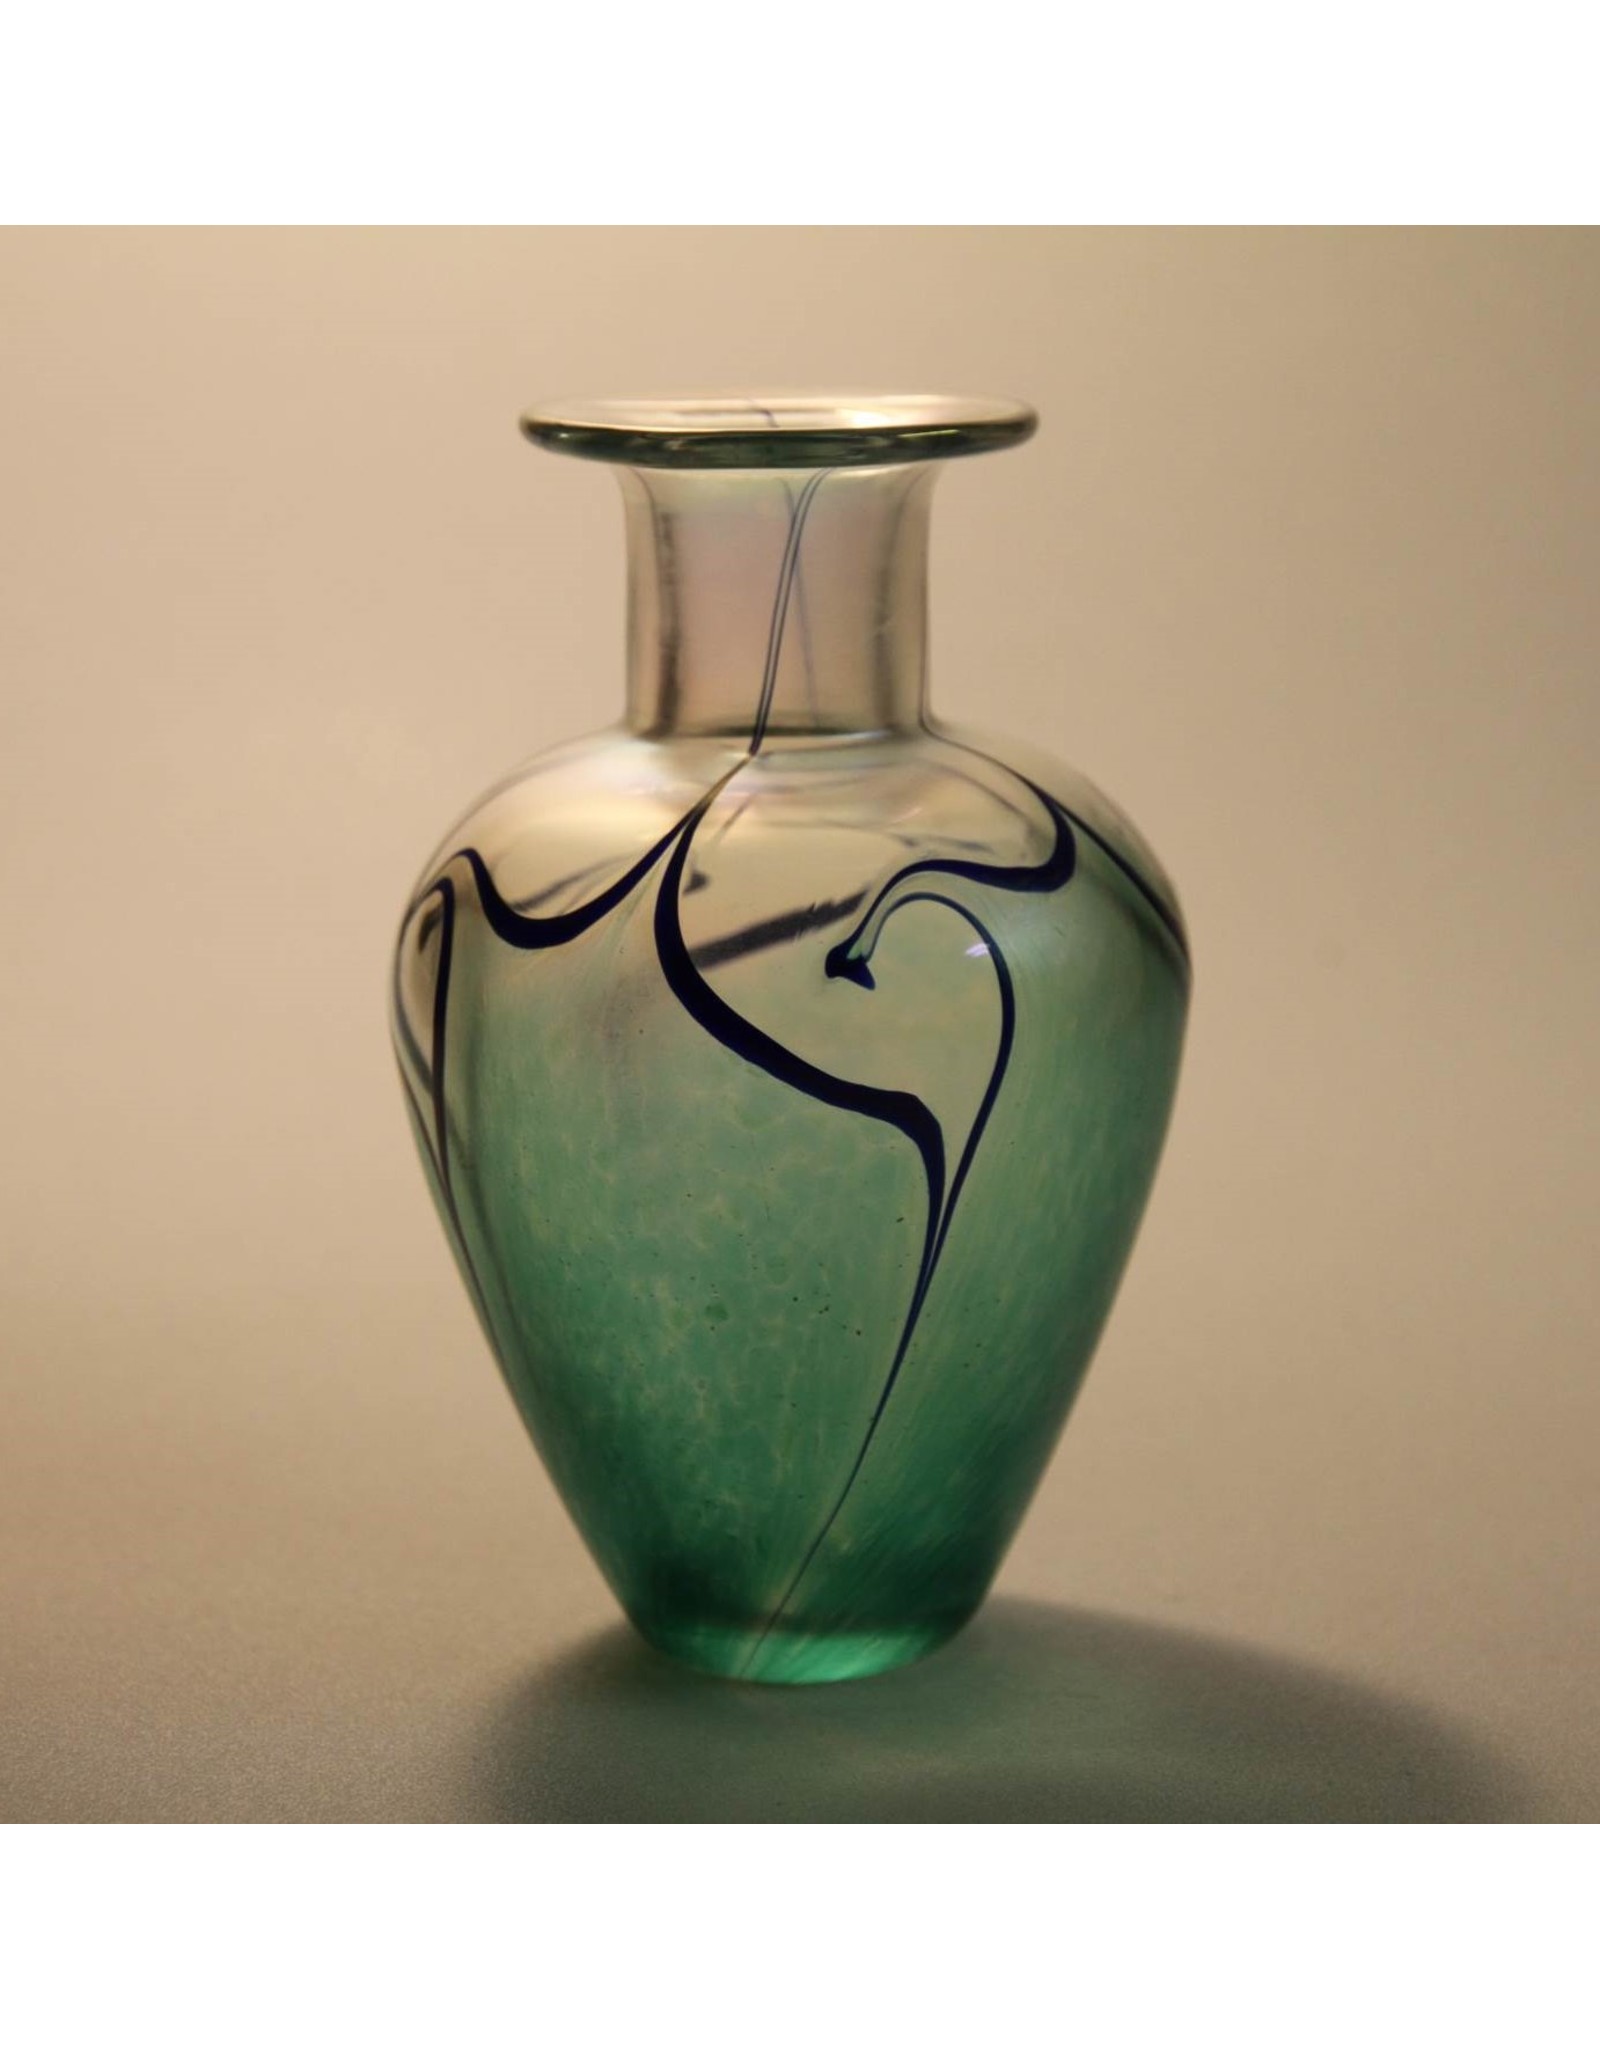 Vase - Robert Held art glass, green with dark blue swirl, 5 3/4"